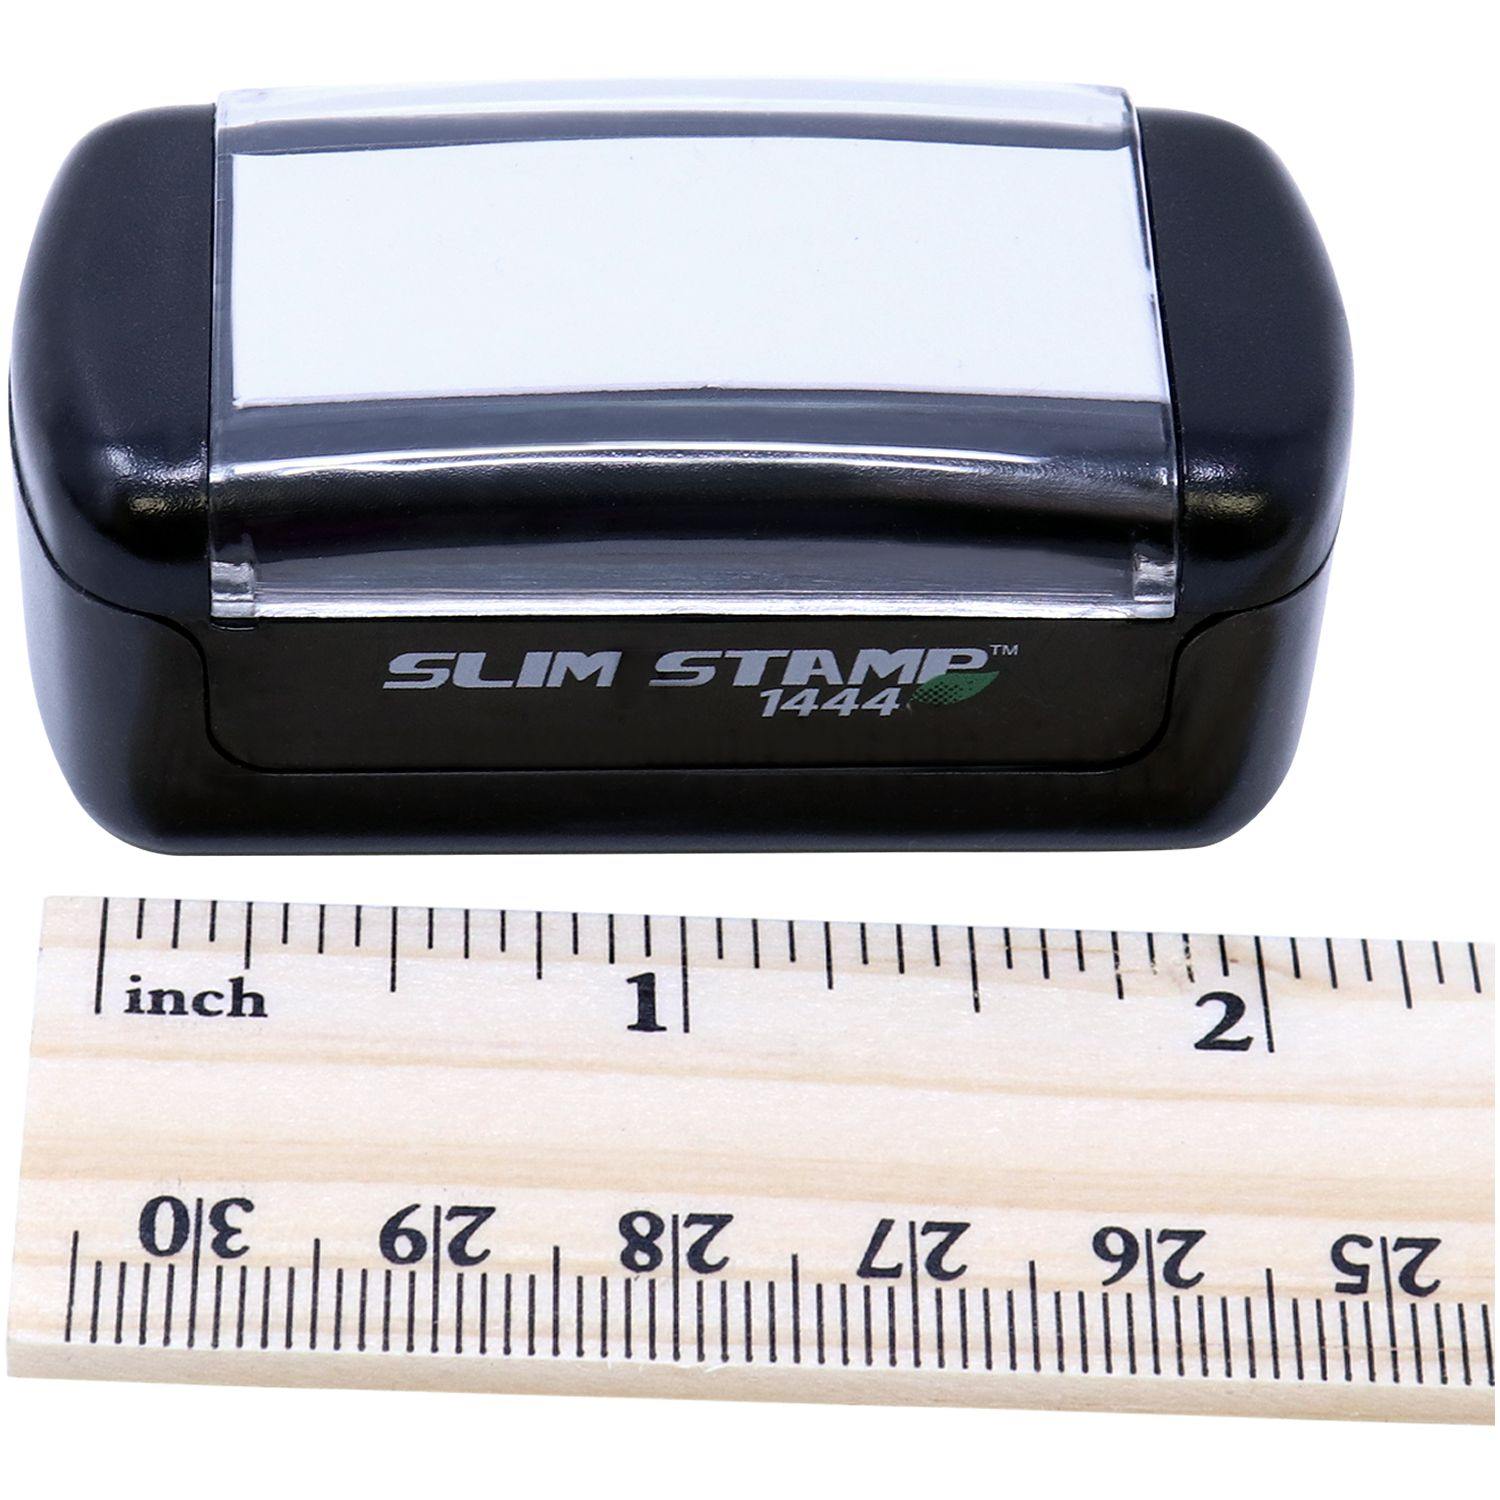 Measurement Slim Pre-Inked Devolver Copia Stamp with Ruler